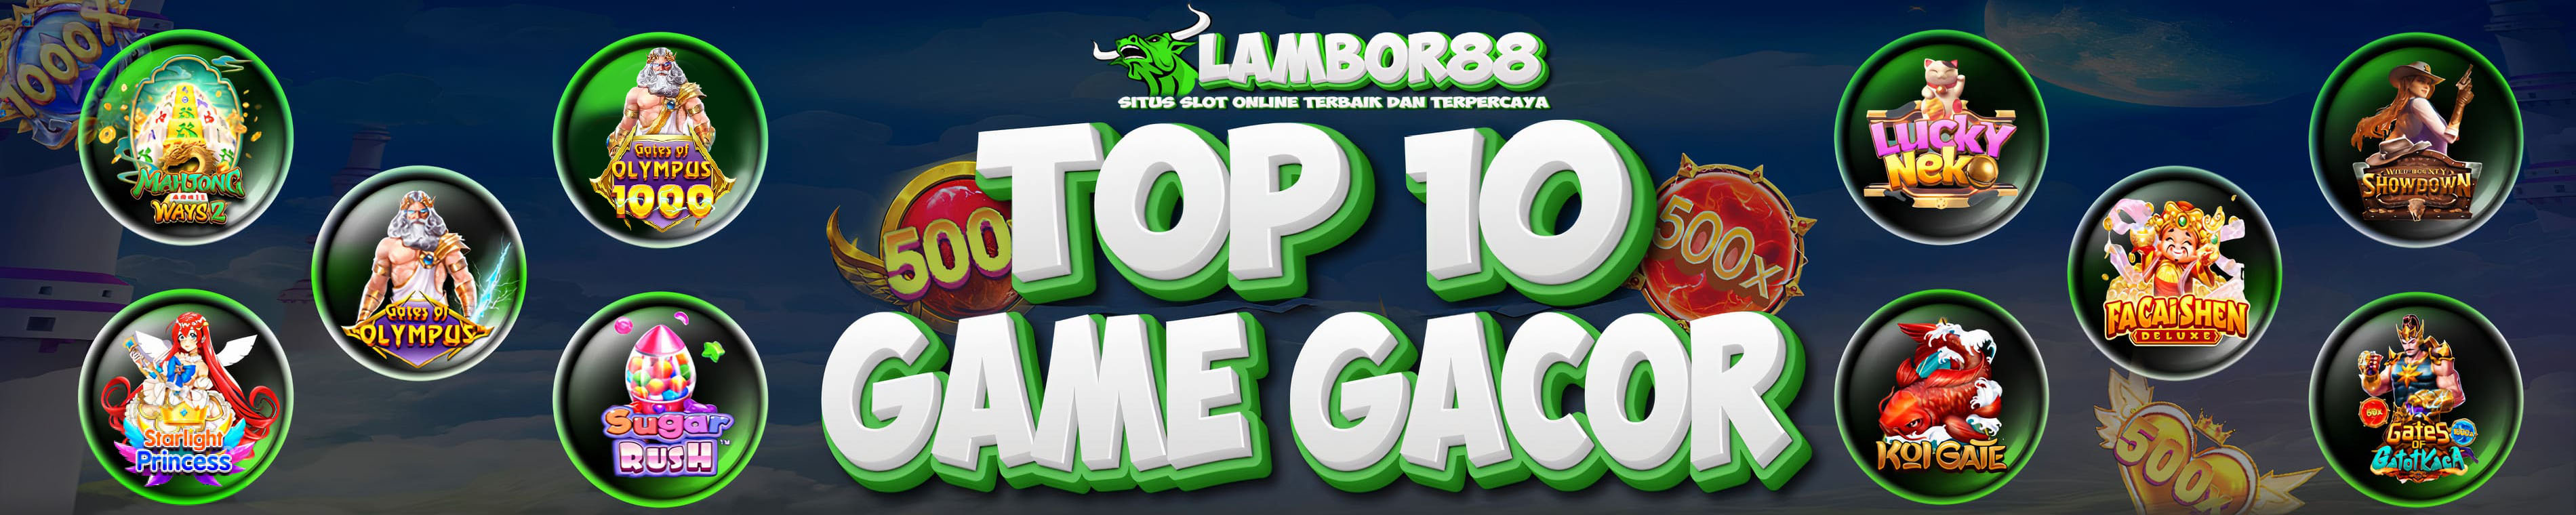 TOP 10 GAME GACOR SLOT